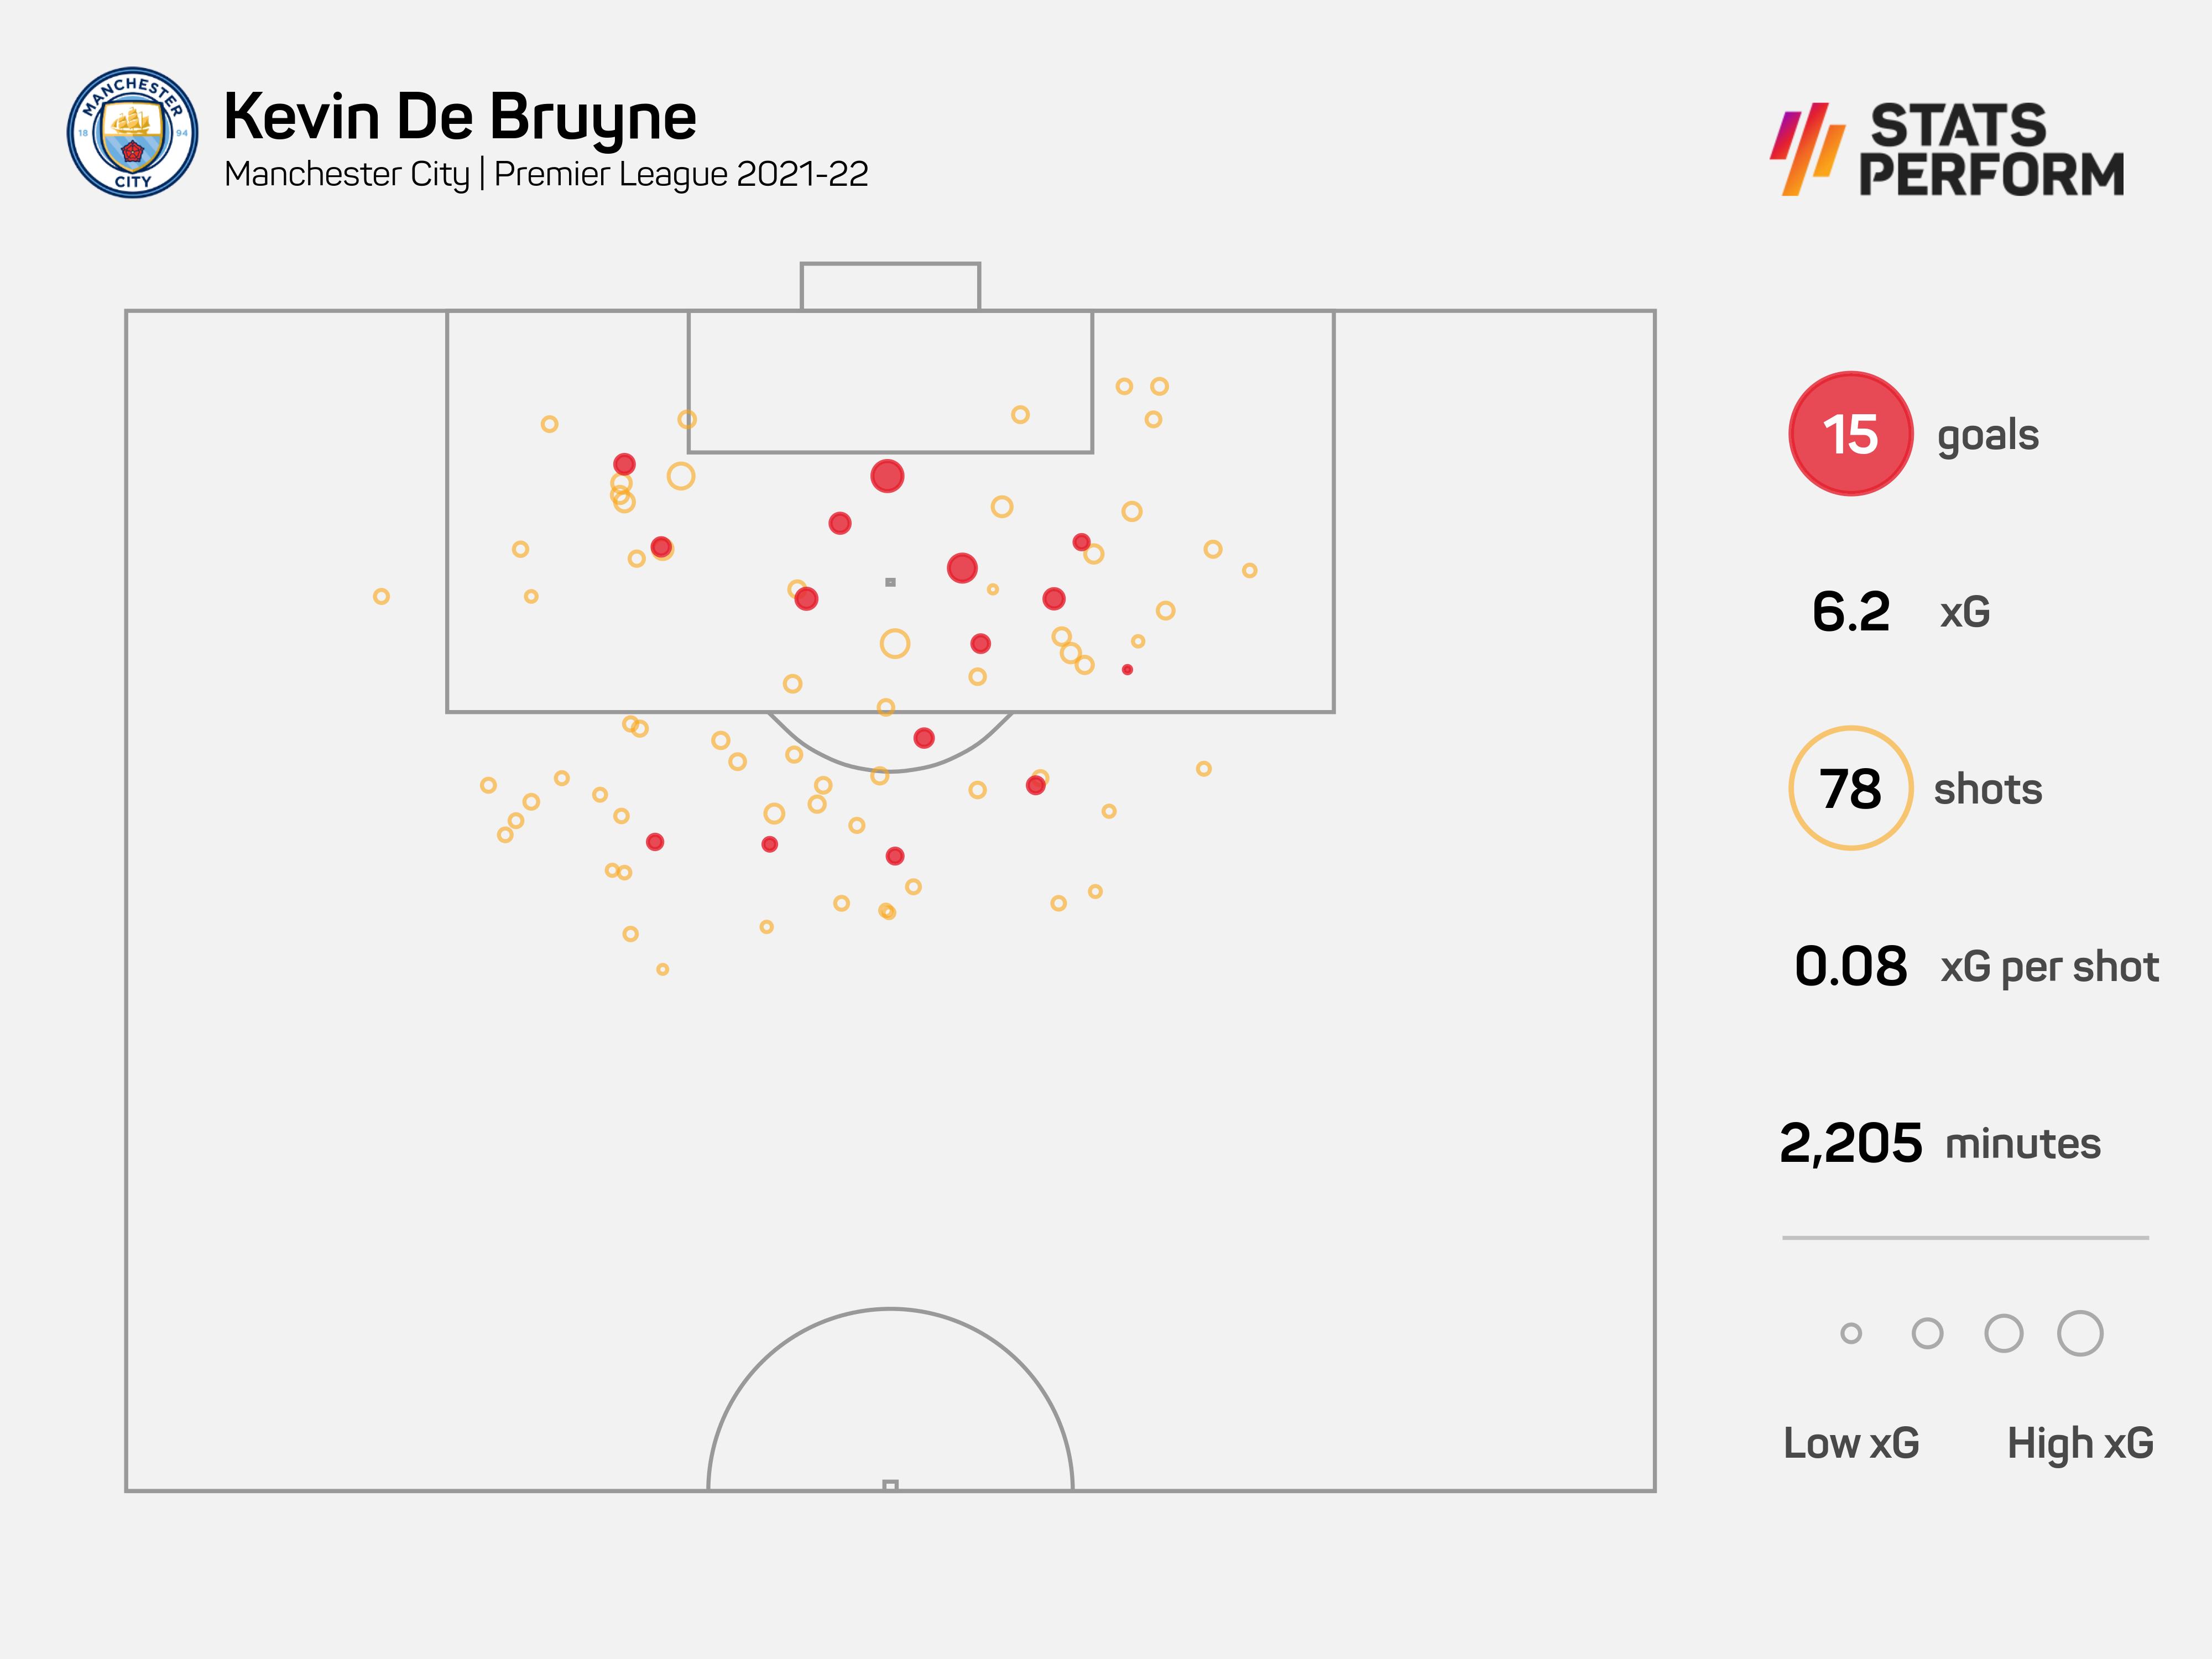 Kevin De Bruyne scored 15 Premier League goals in the 2021-22 campaign